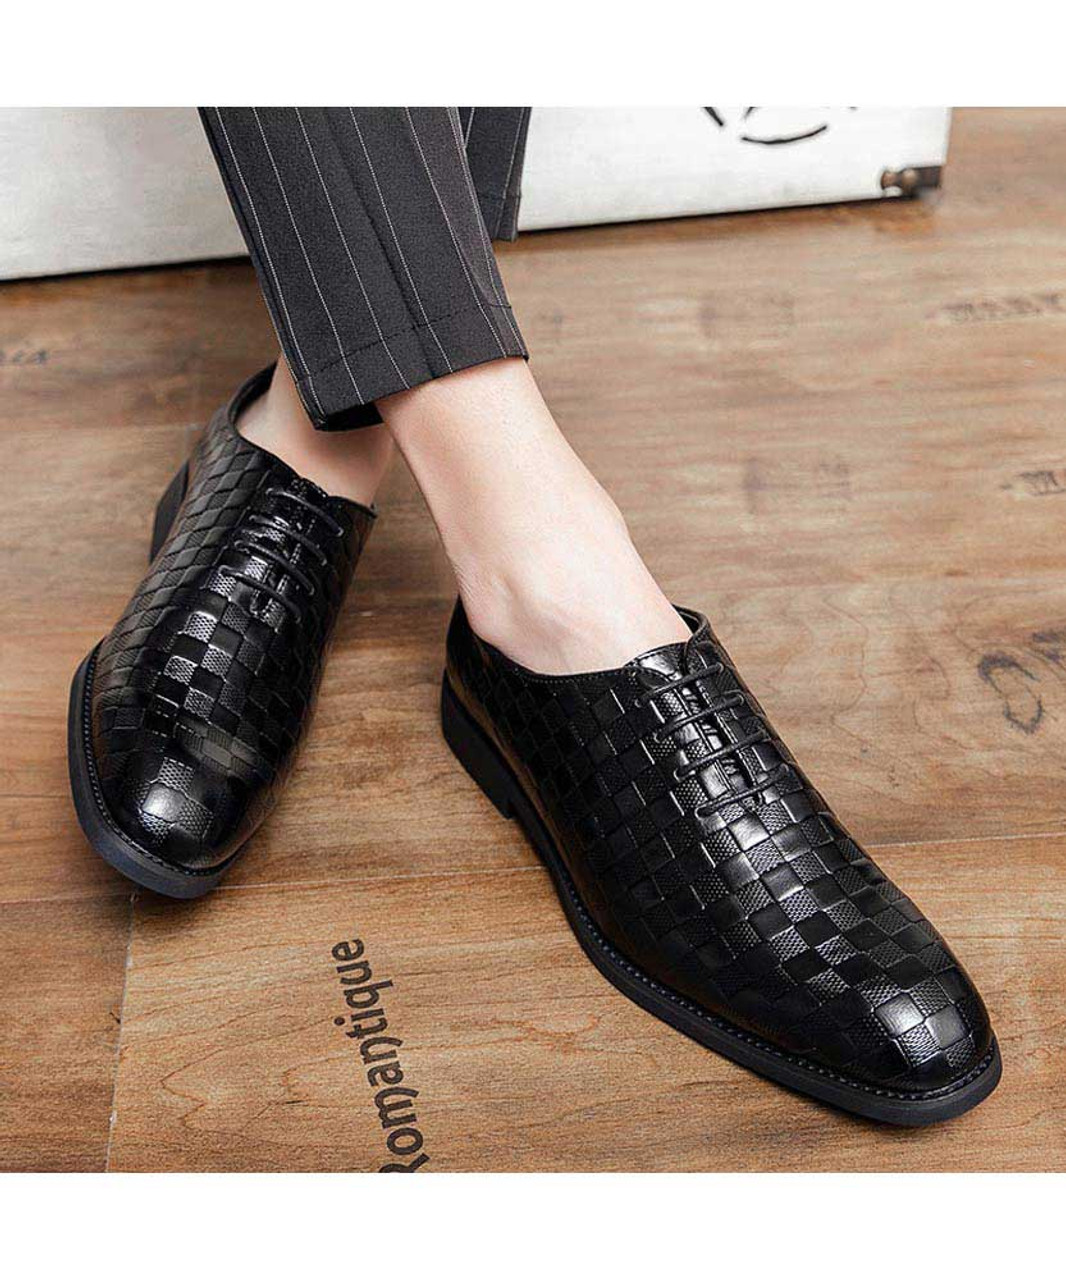 Black check pattern leather oxford dress shoe | Mens dress shoes online ...